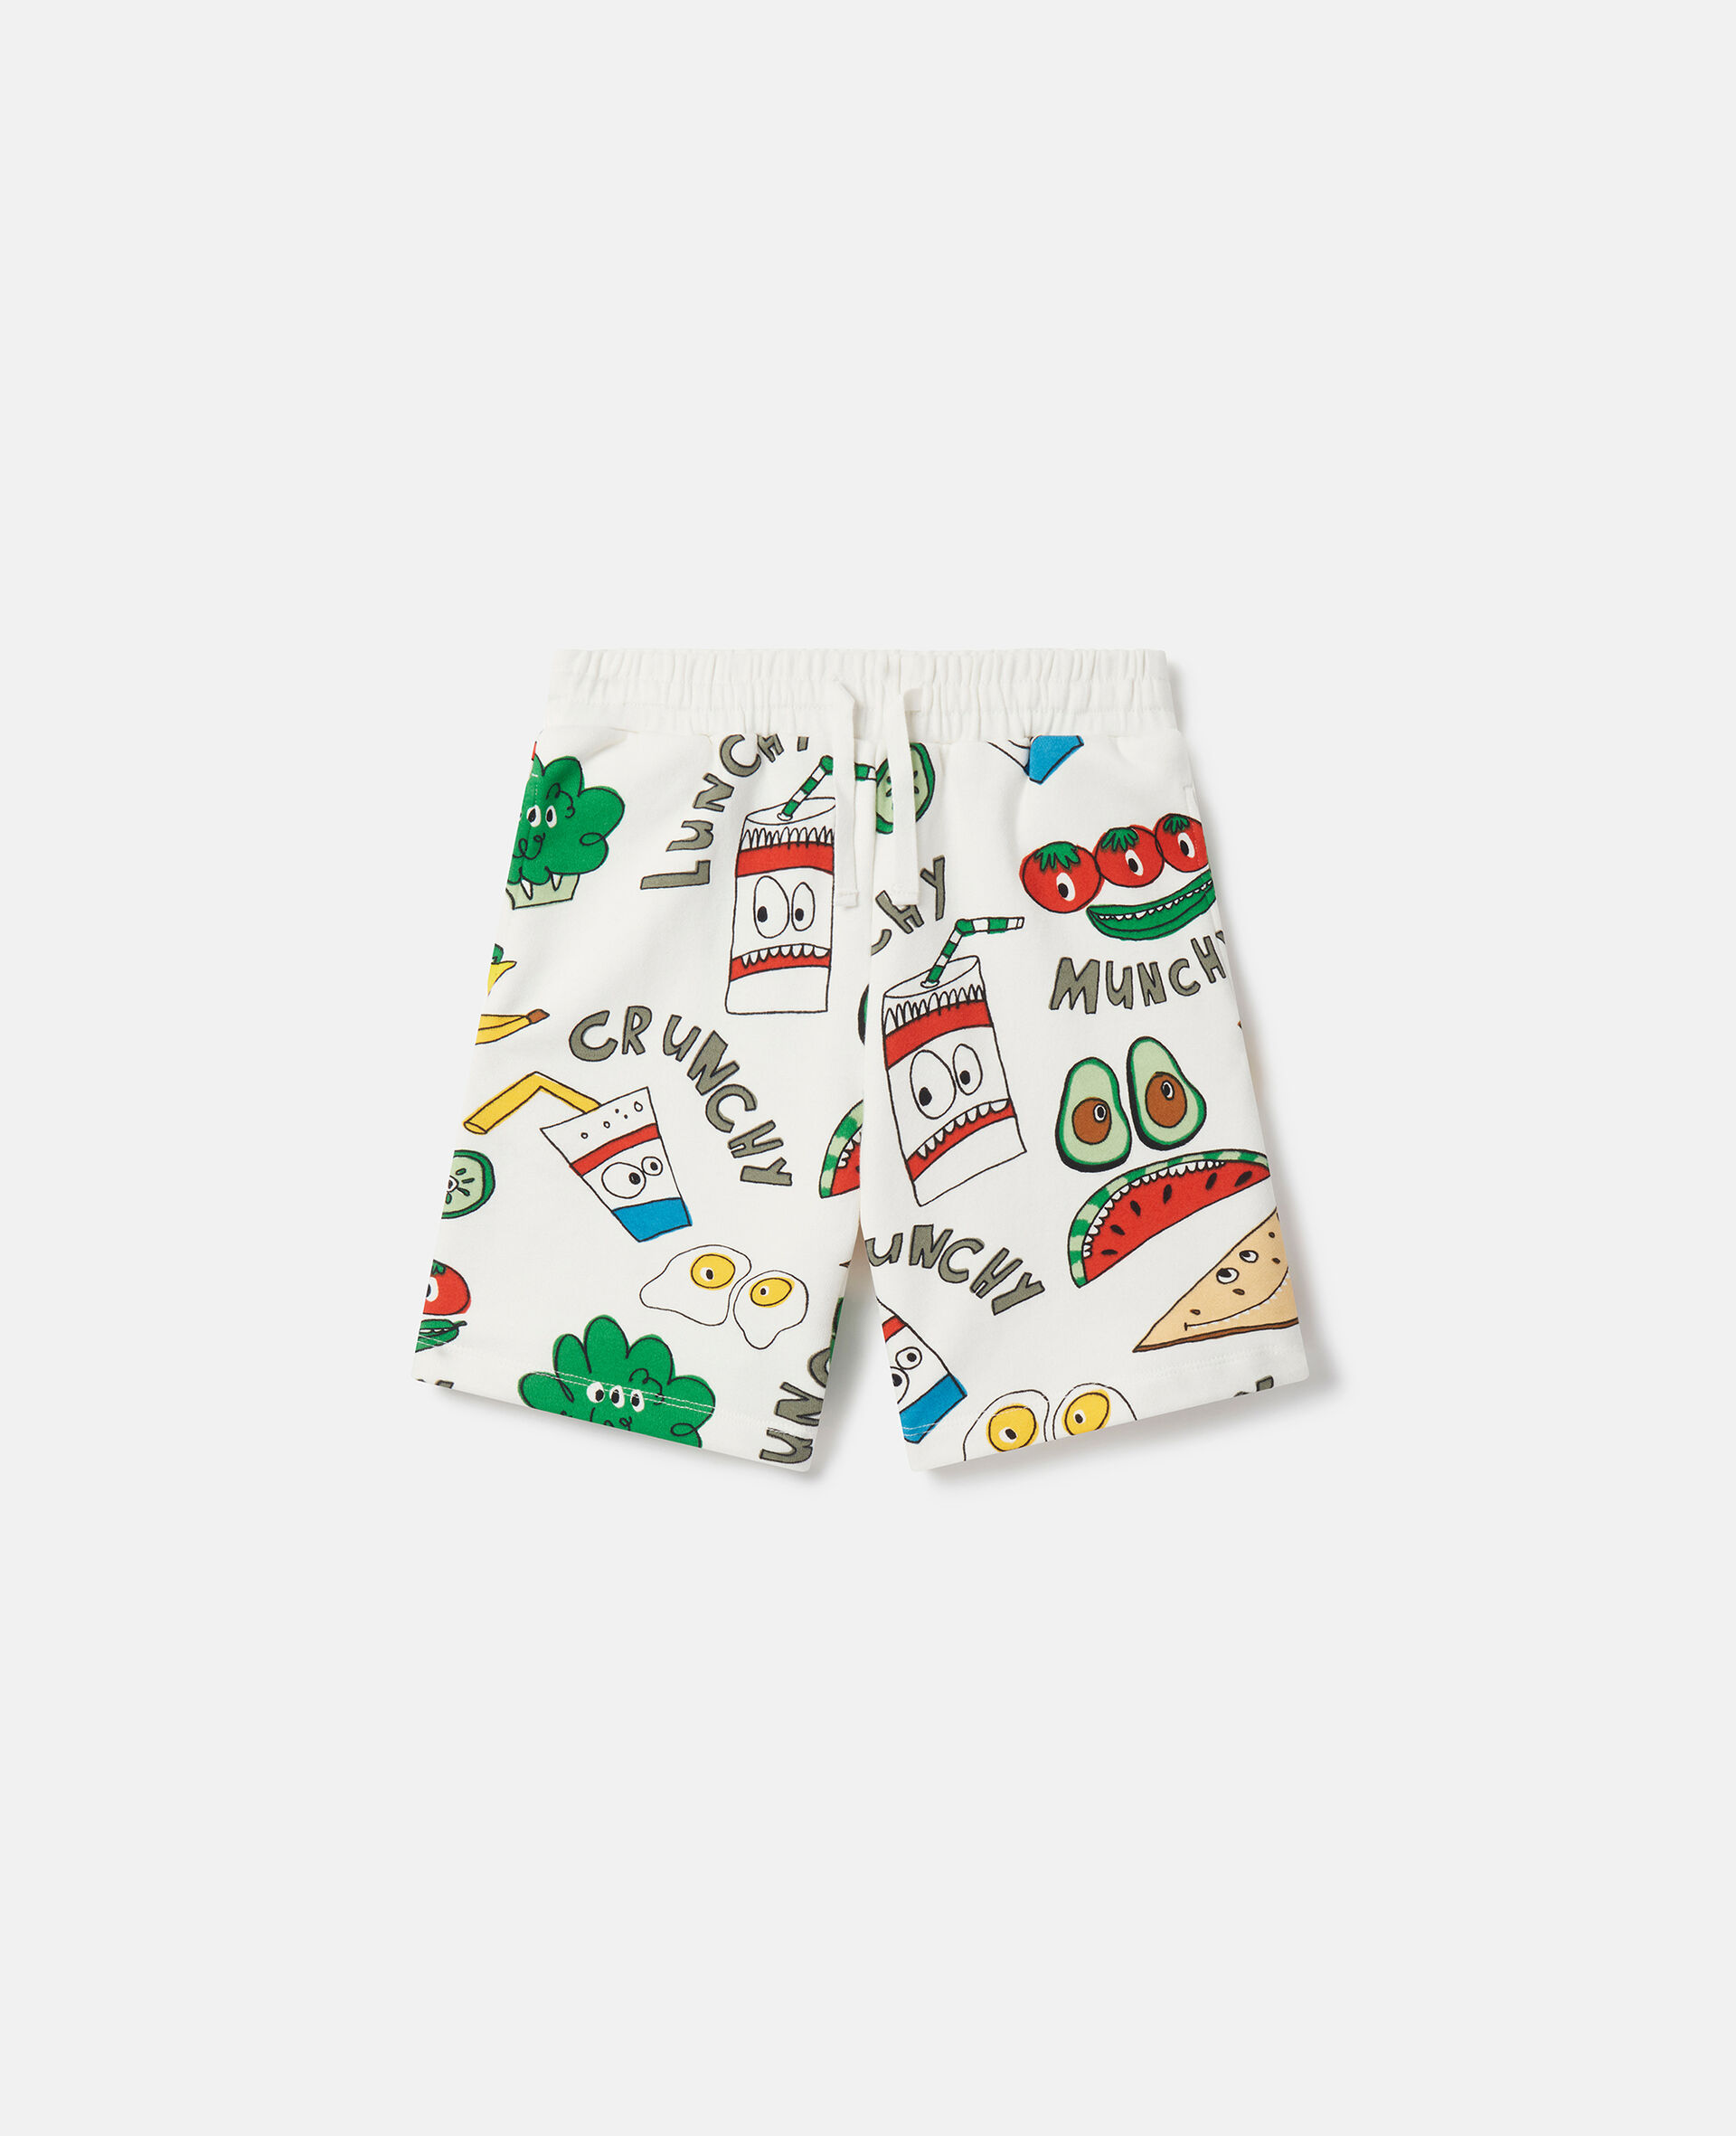 Crunchy Lunchy Print Shorts-Multicoloured-medium